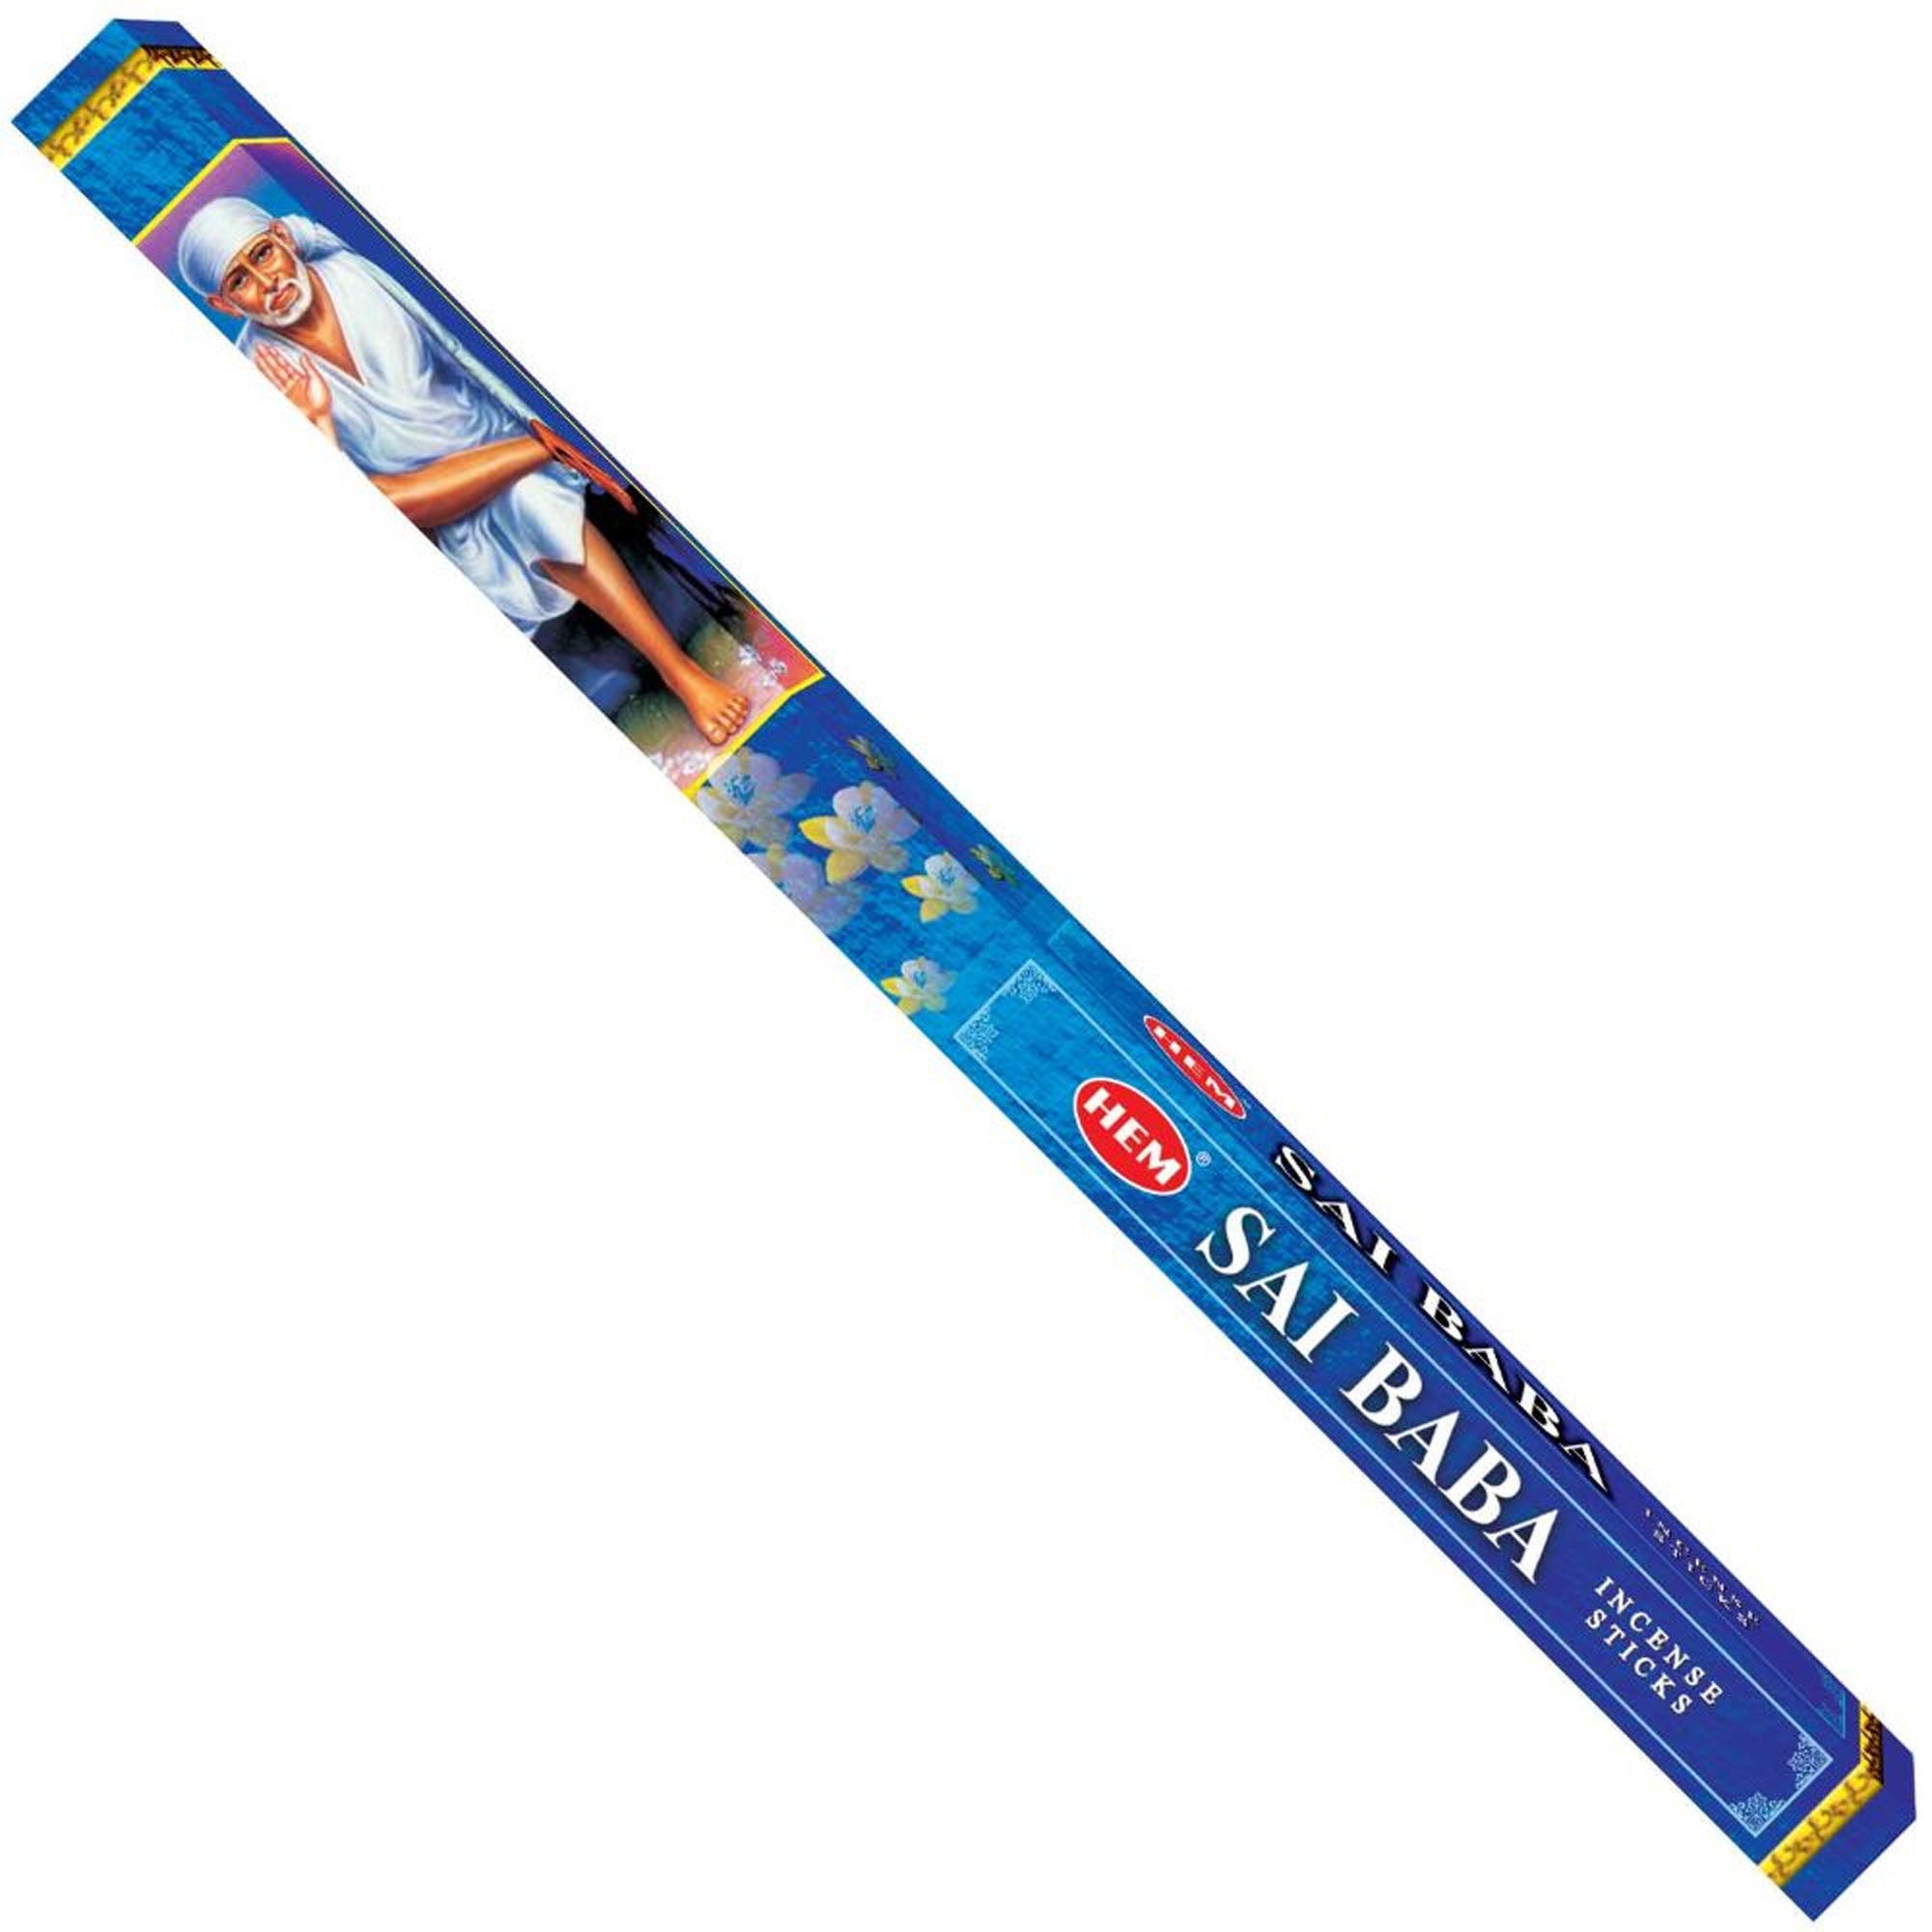 Hem - Square - Sai Baba Incense Sticks